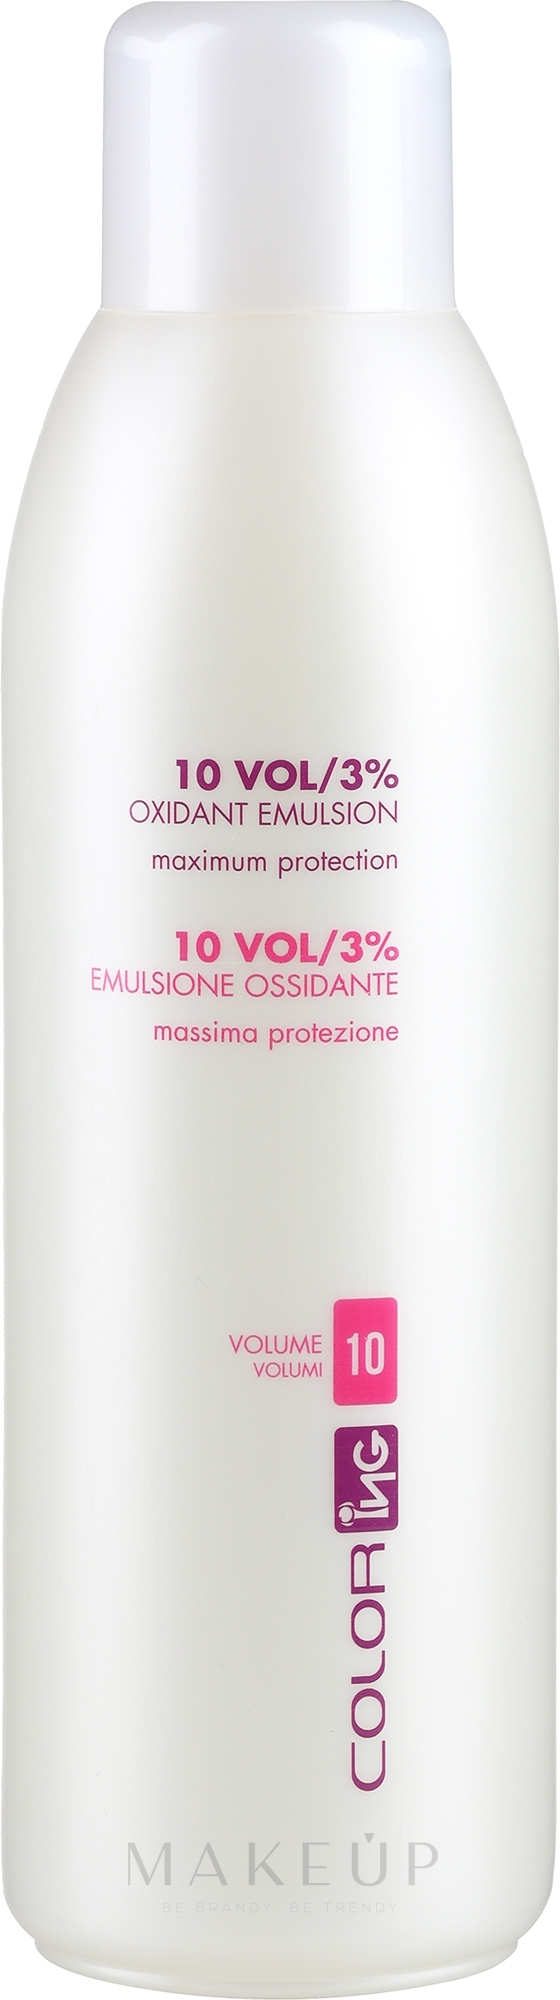 Oxidationsemulsion 3% - ING Professional Color-ING Oxidante Emulsion — Foto 1000 ml